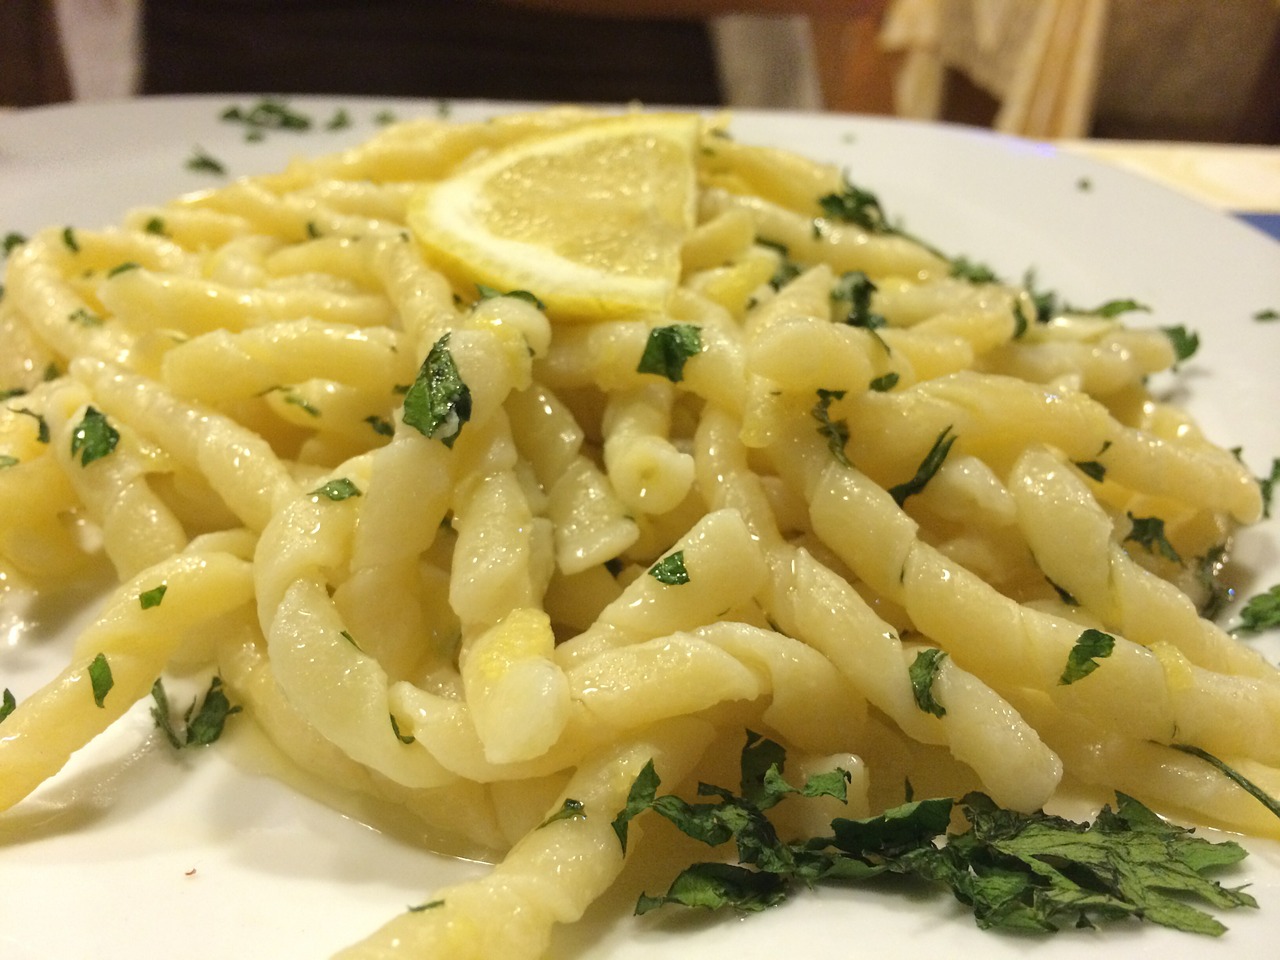 Lemon Braised Artichokes over Pasta